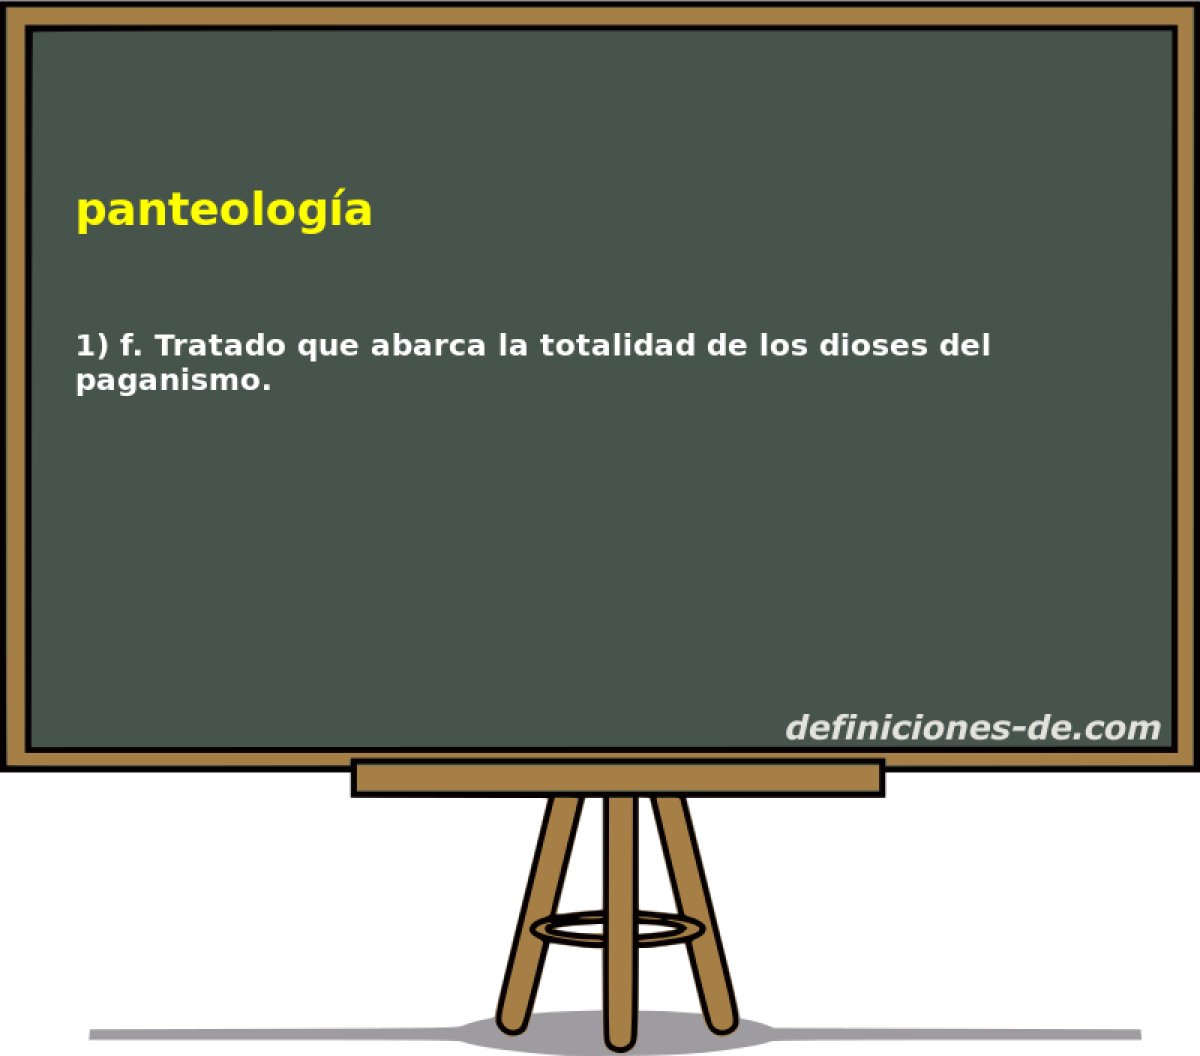 panteologa 